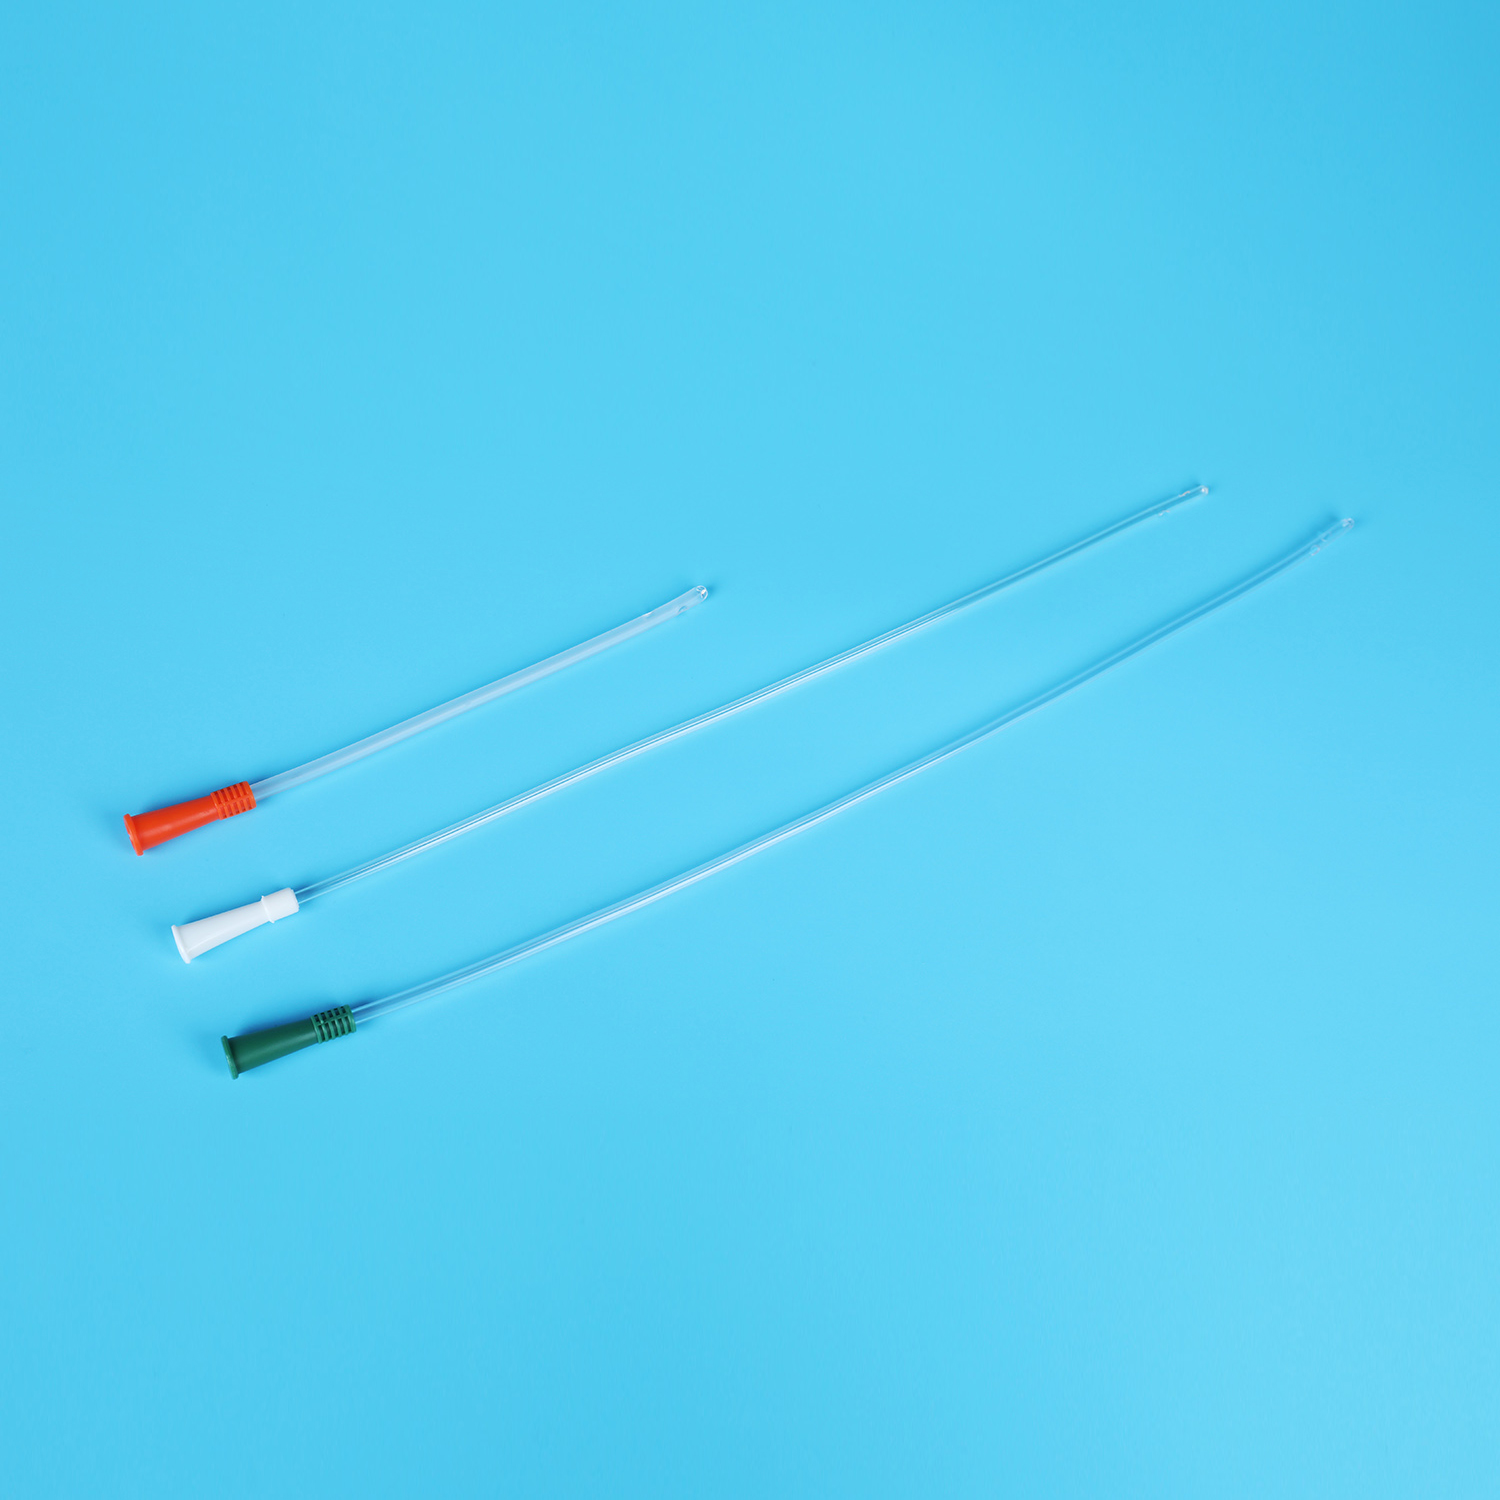 Disposable PVC Nelaton Catheter